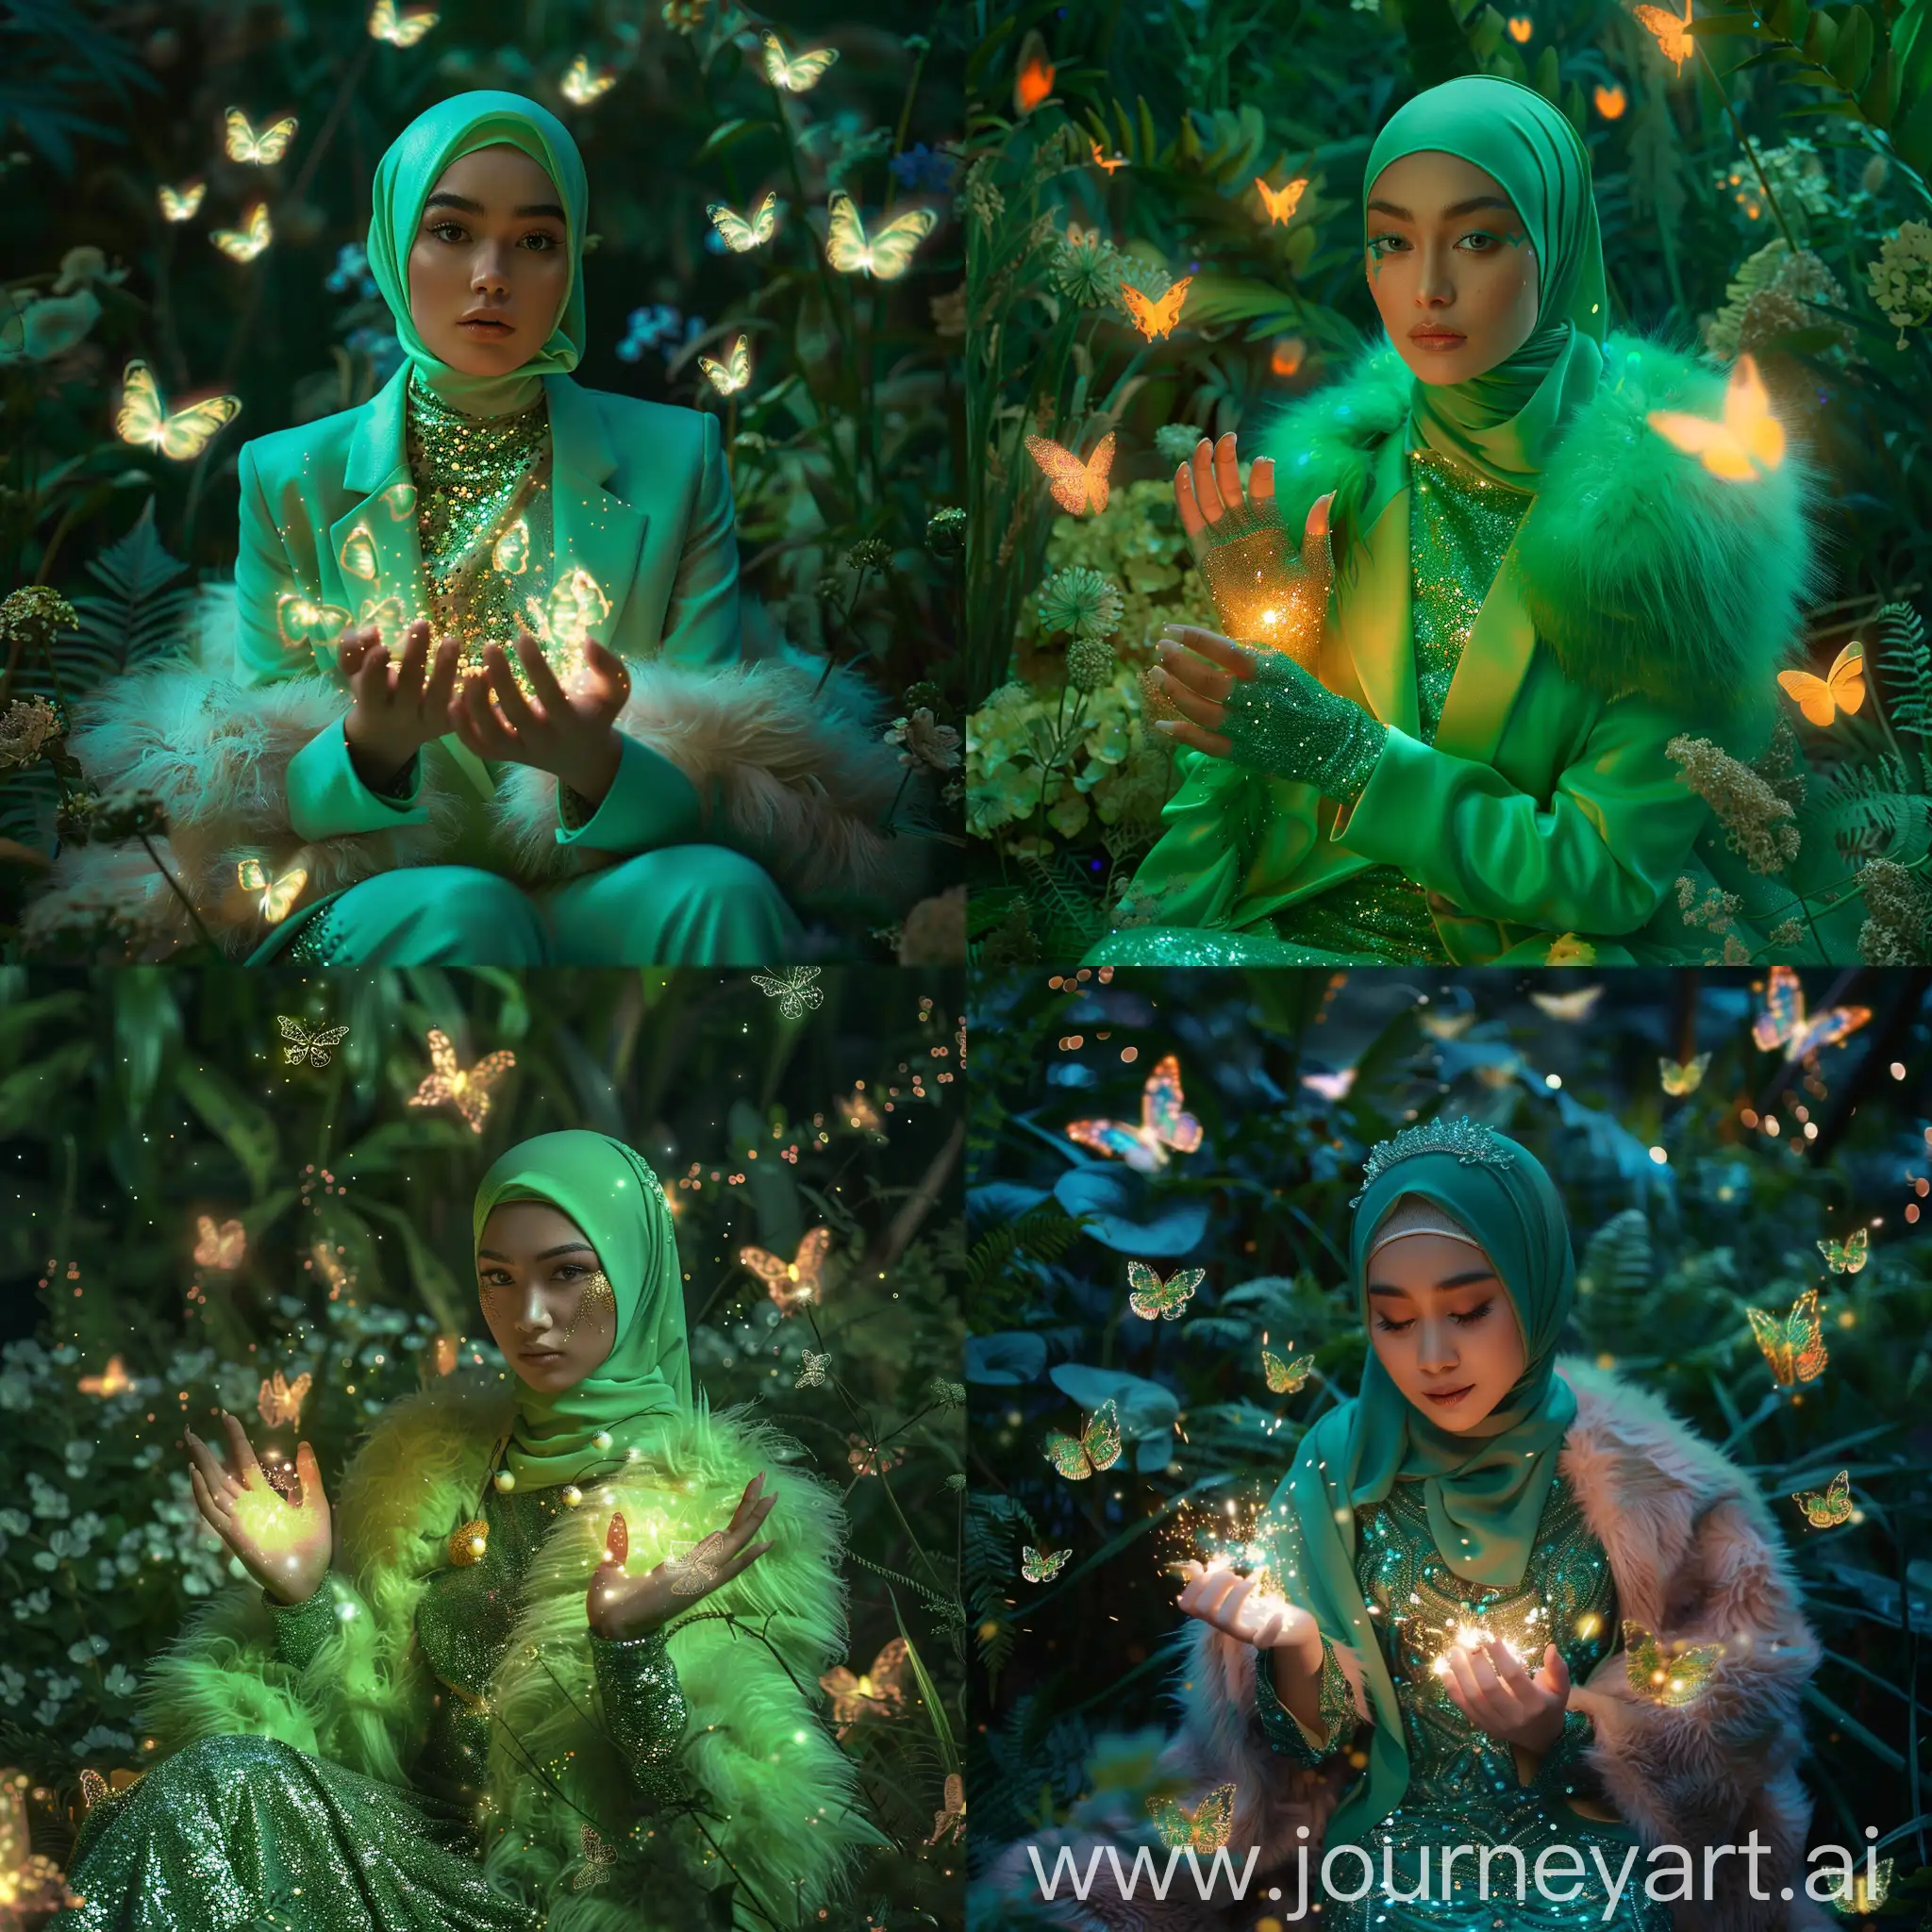 Glowing-Green-Mermaid-in-Enchanted-Garden-at-Night